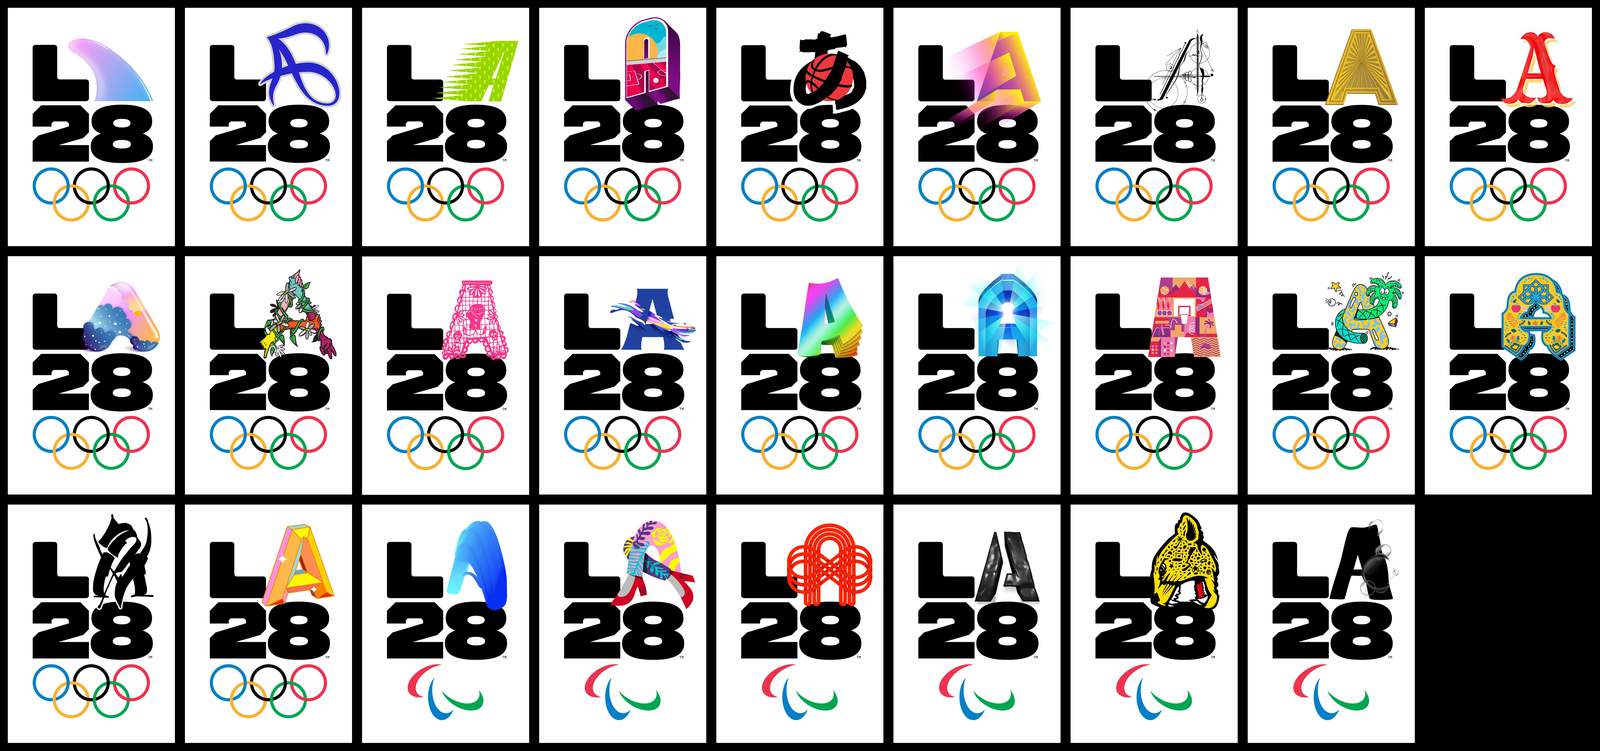 LA2028 unveils diversity logo; CEO preaches need for change